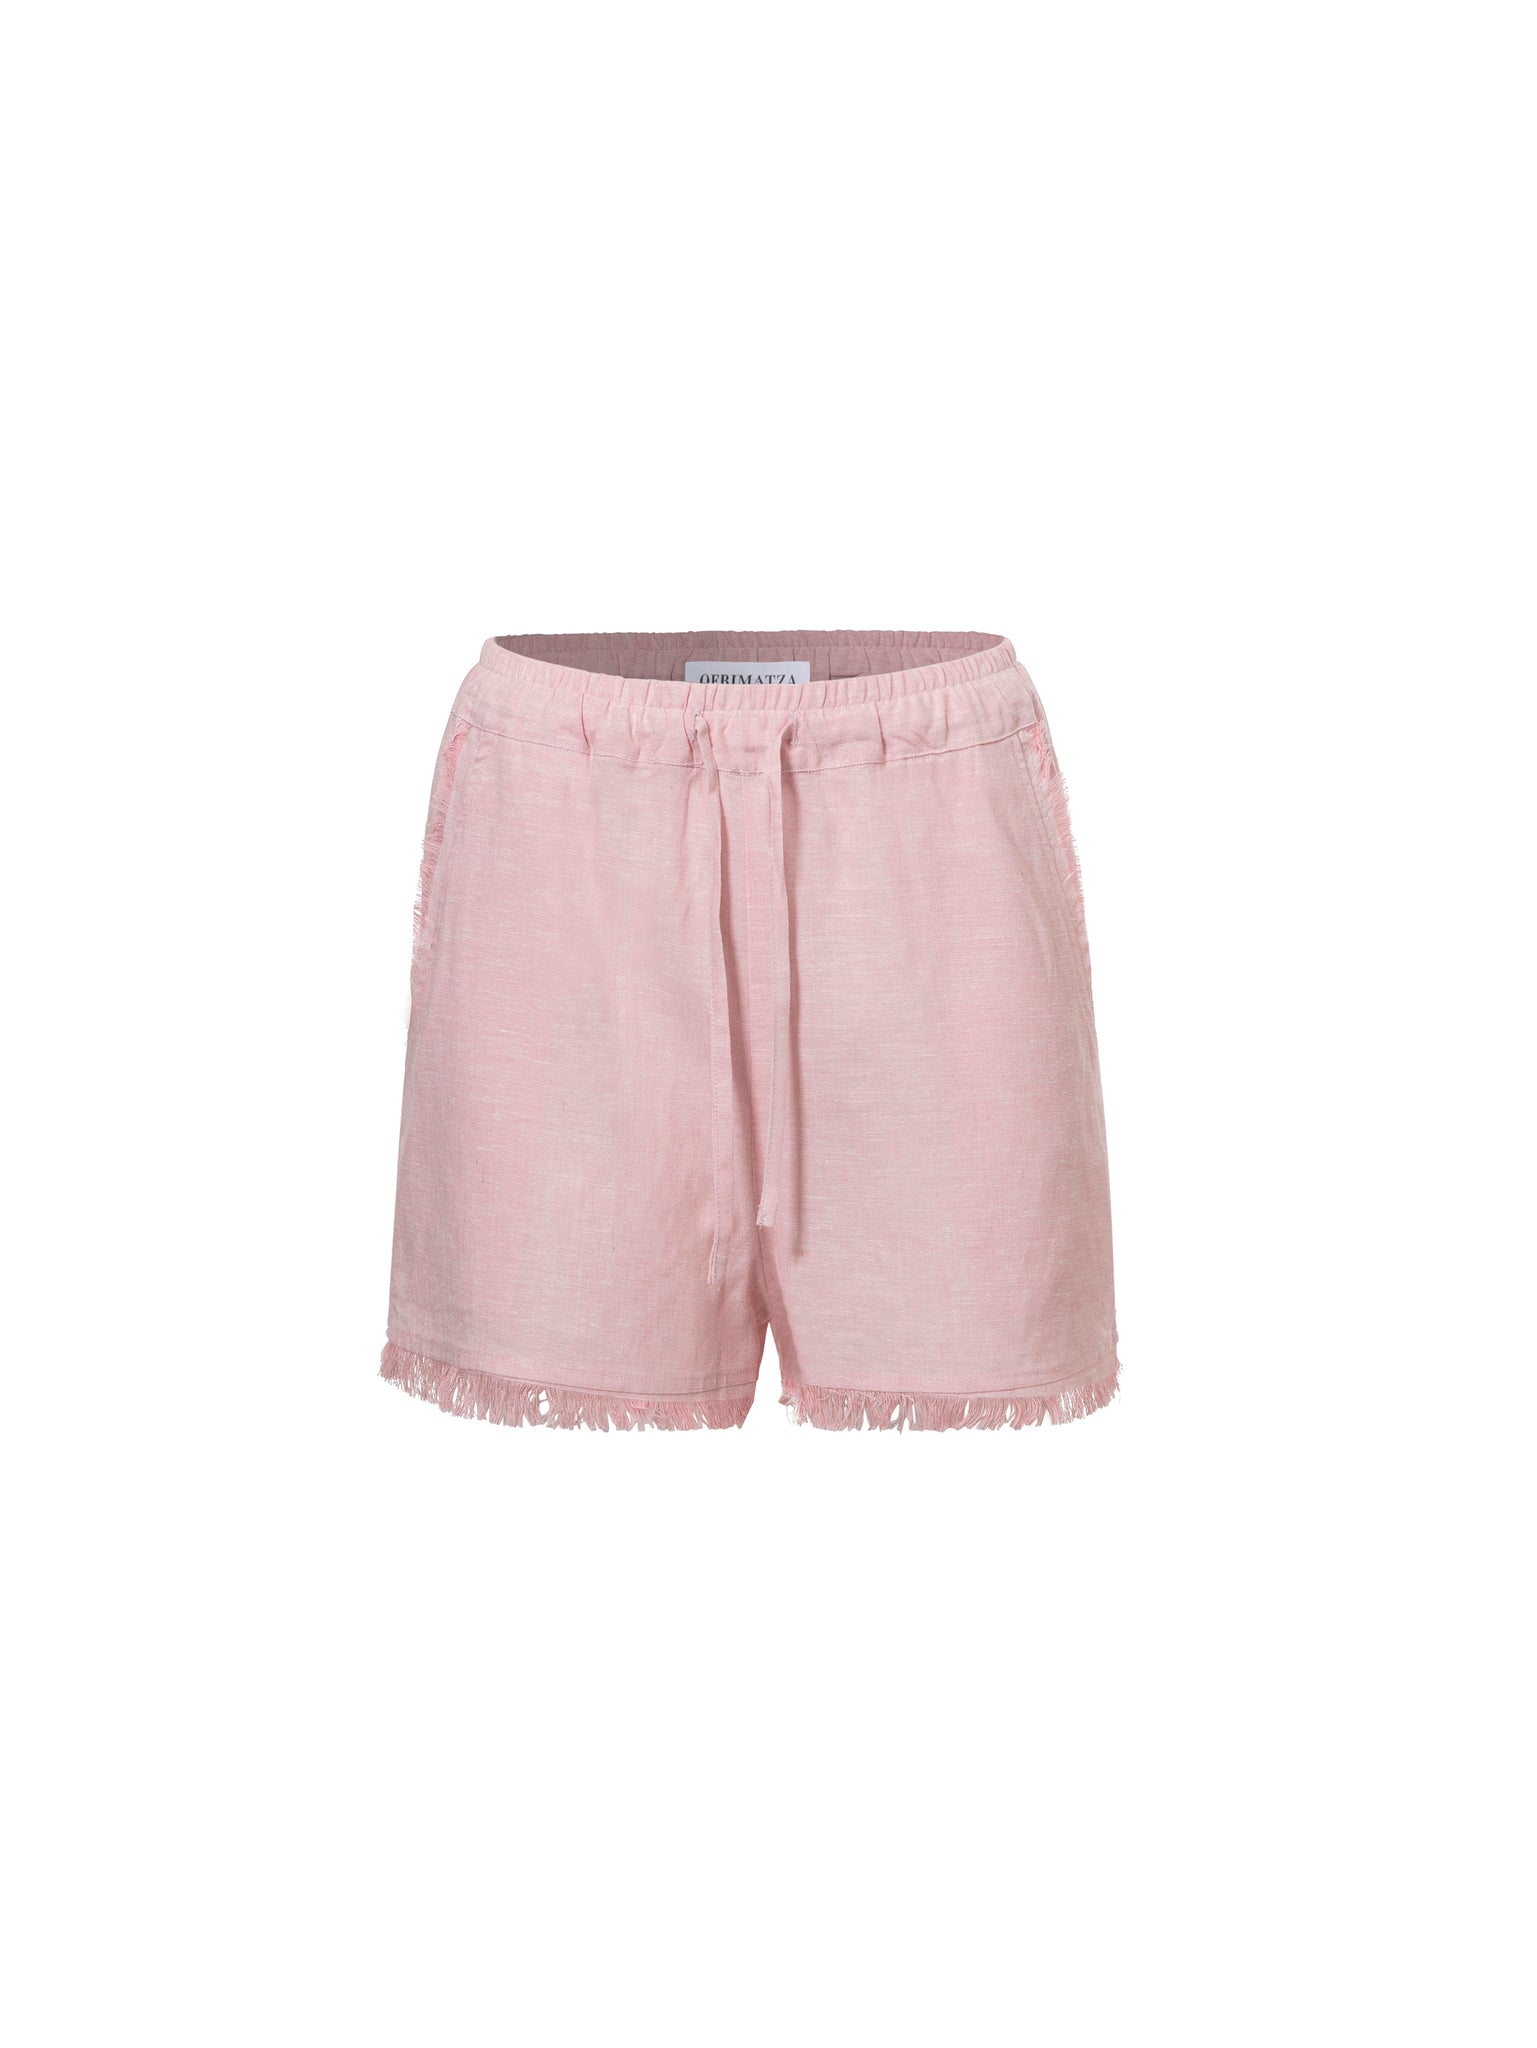 Exclusive Linen Beachwear | Sunset Pink